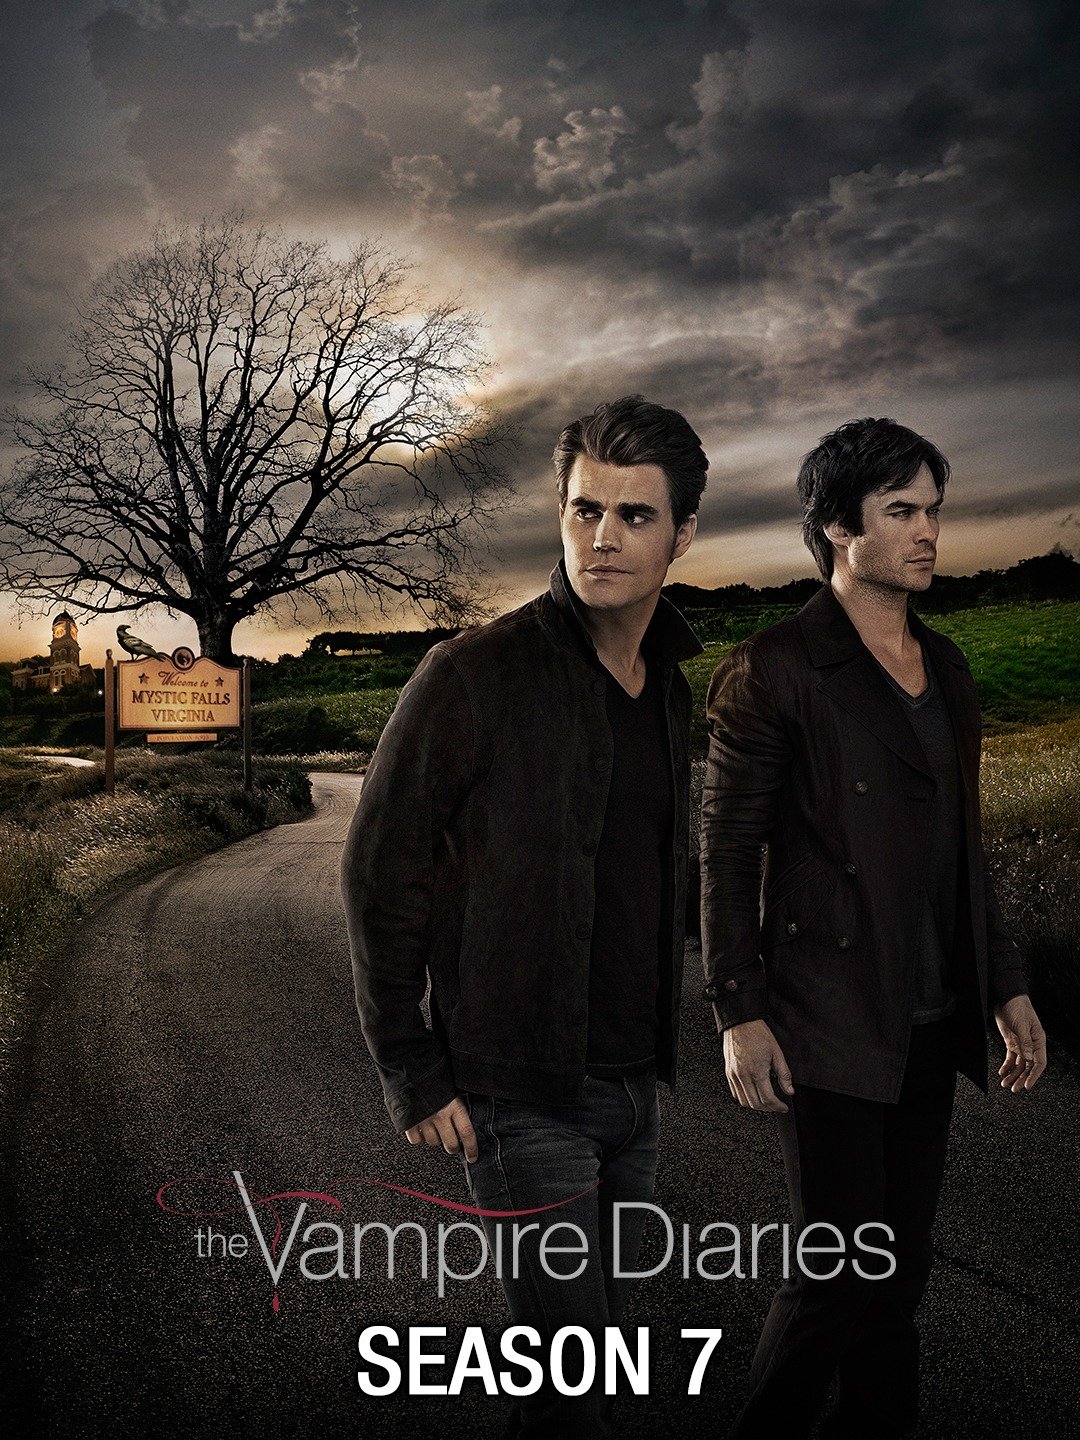 the vampire diaries season 6 episode 8 online free